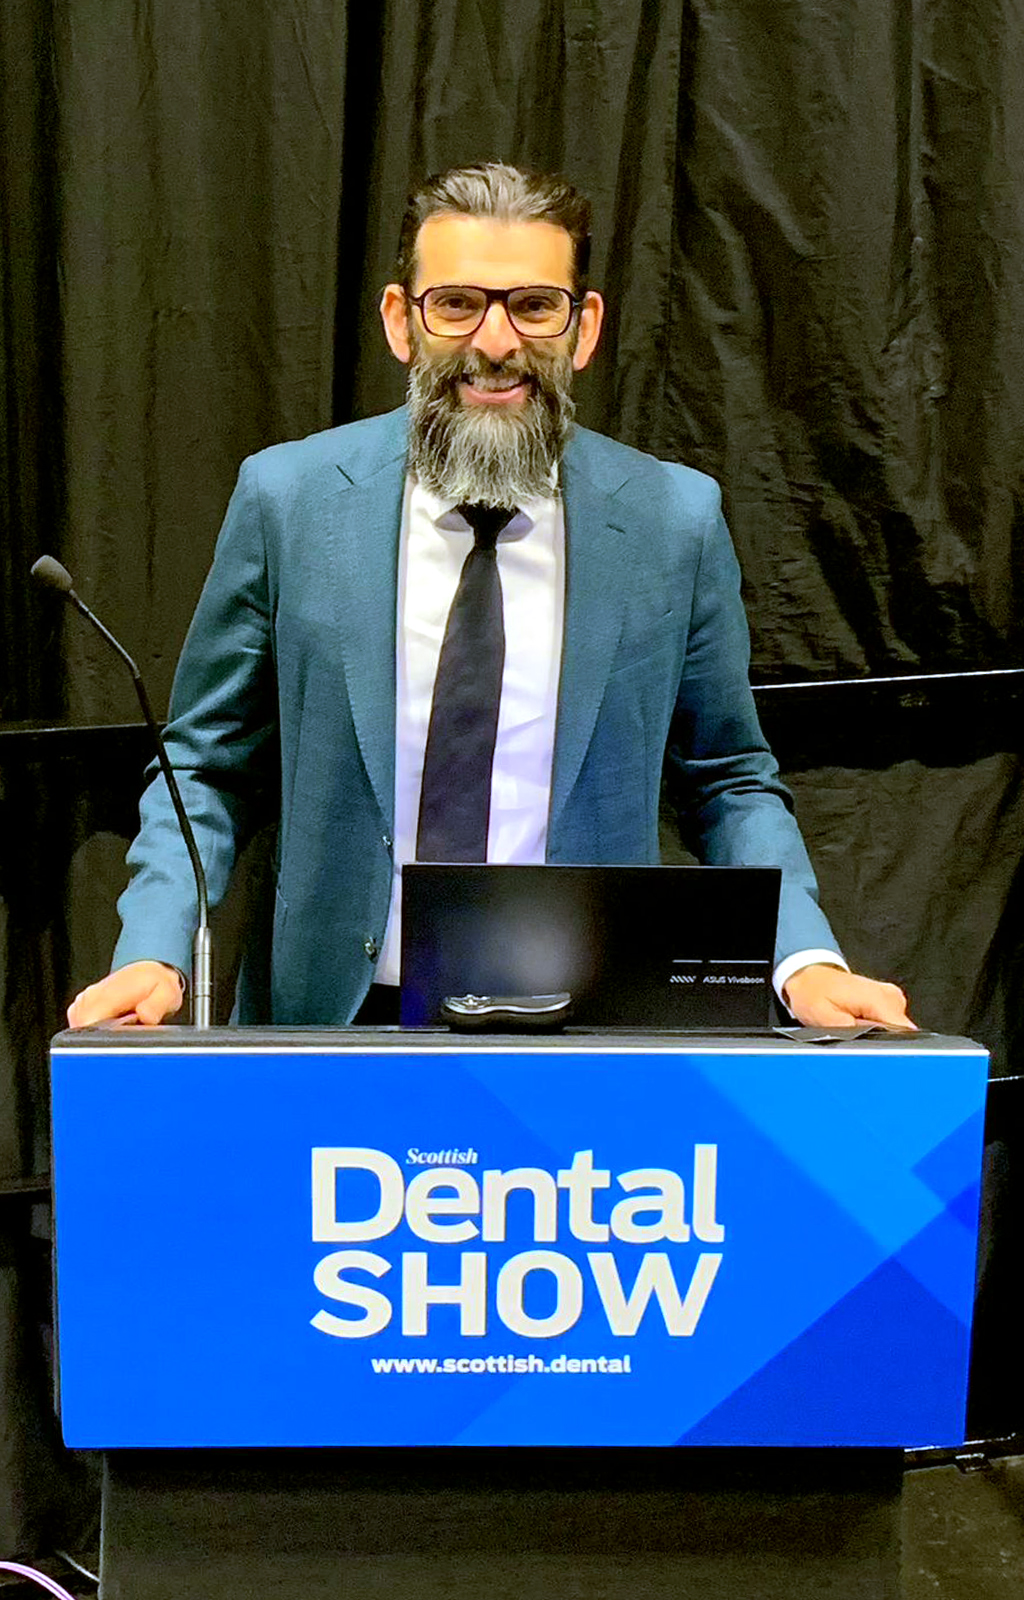 Tariq standing behind the podium at the Scottish Dental Show